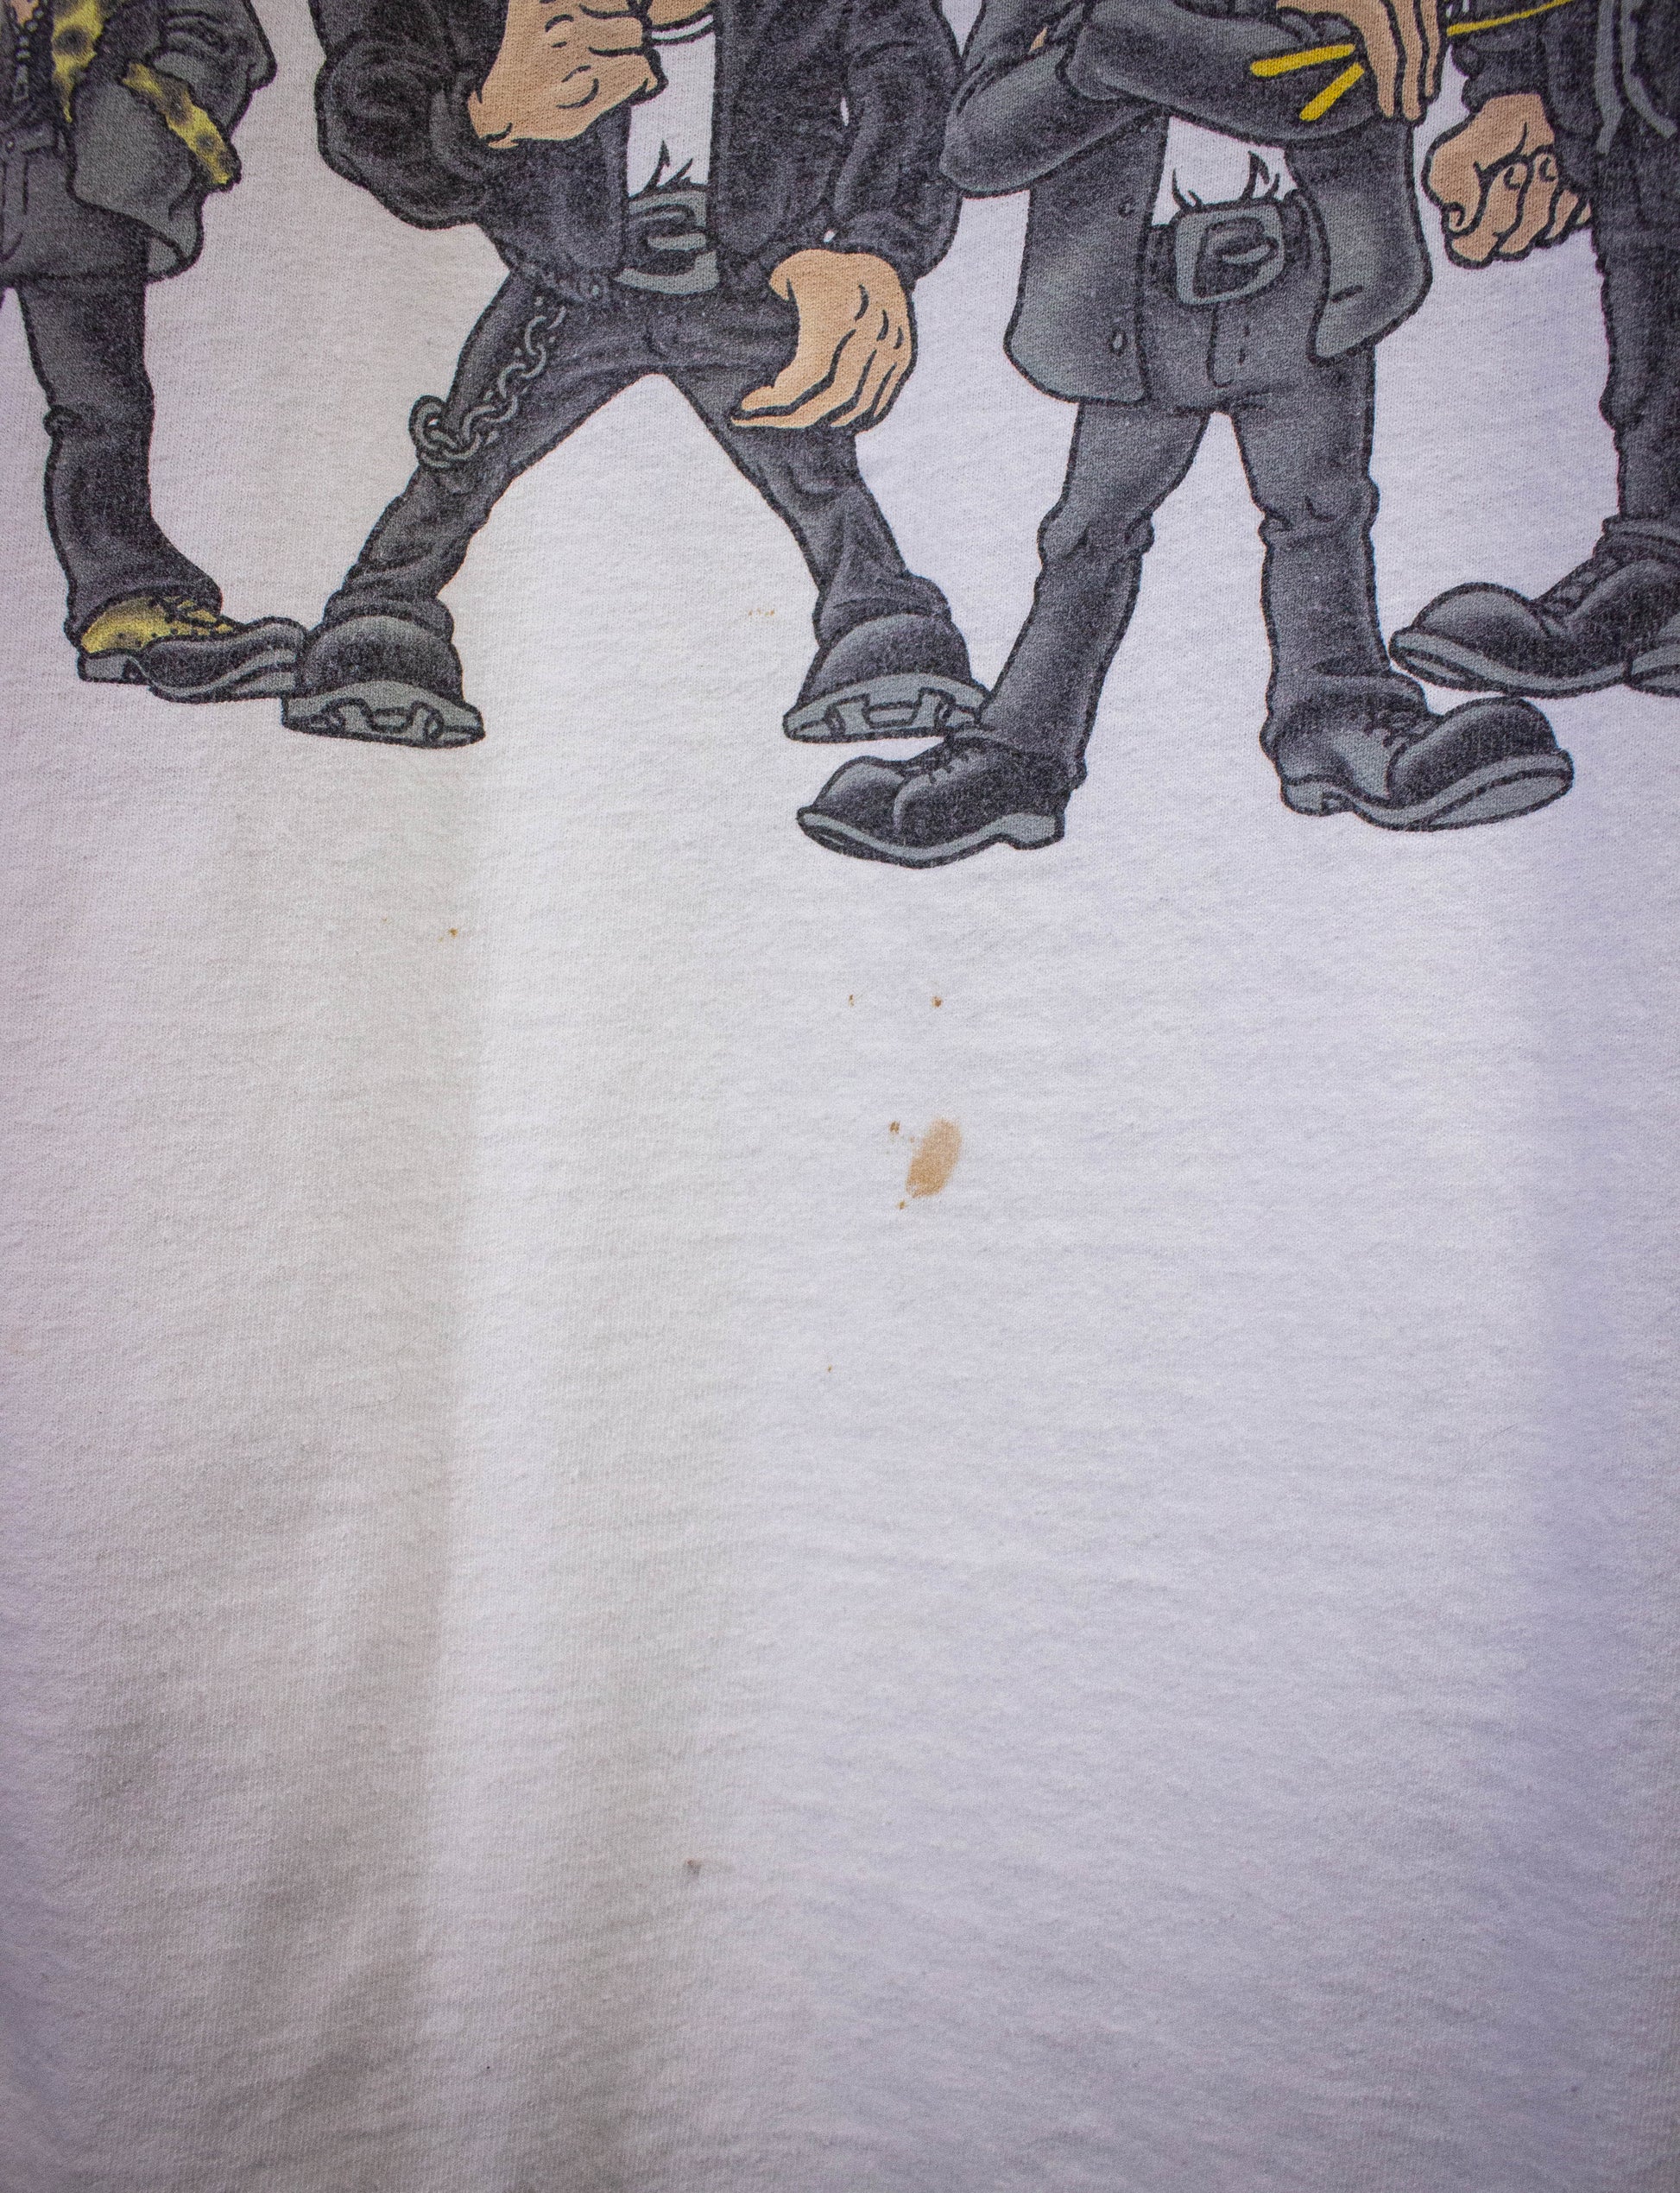 Vintage Metallica Cartoon Concert T Shirt 1996 White XL